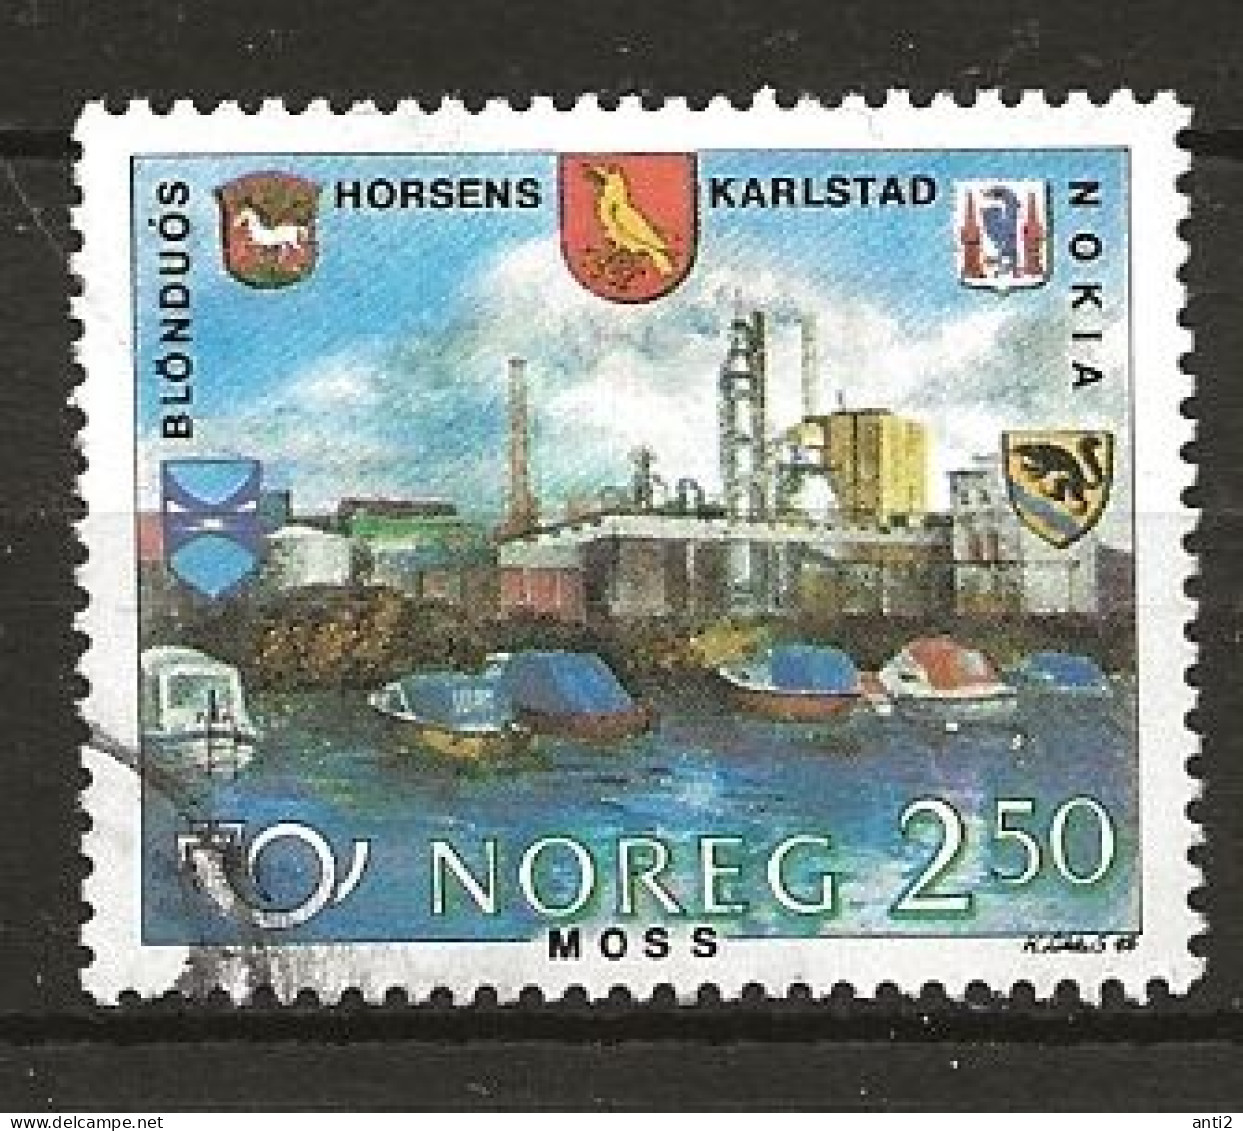 Norway 1986 NORTH: Twin Cities In Scandinavia, Moss, Blonduos, Horsens, Karlstad, Nokia, Mi 948, Cancelled(o) - Gebraucht